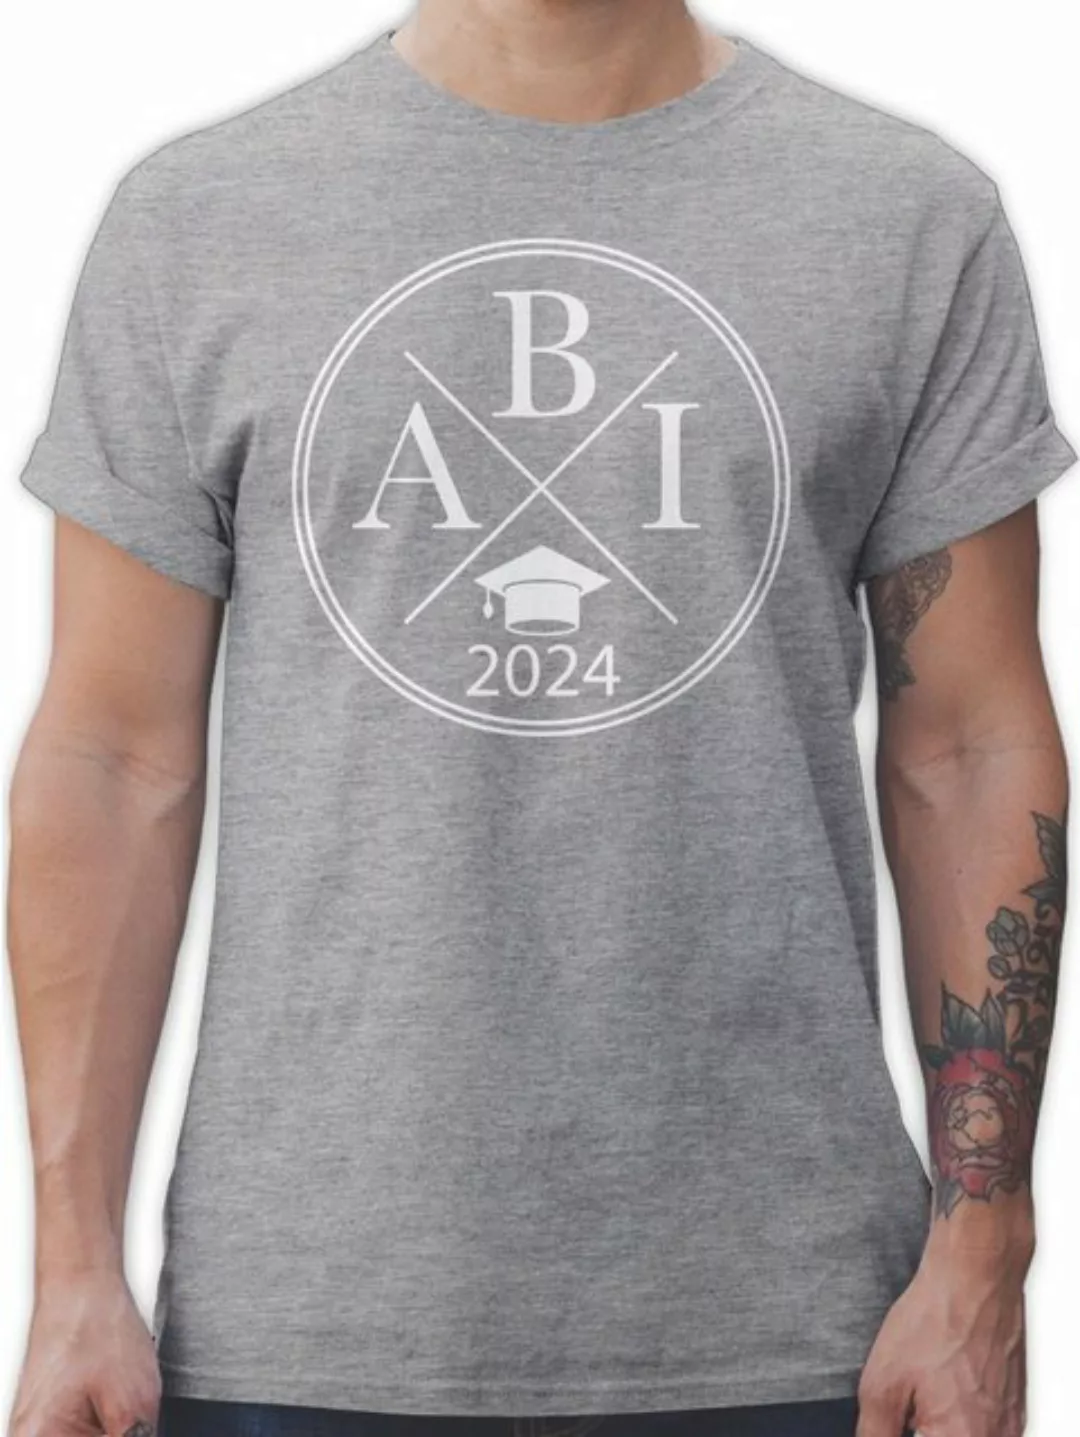 Shirtracer T-Shirt Abi 2024 Hipster X Abitur & Abschluss 2024 Geschenk günstig online kaufen